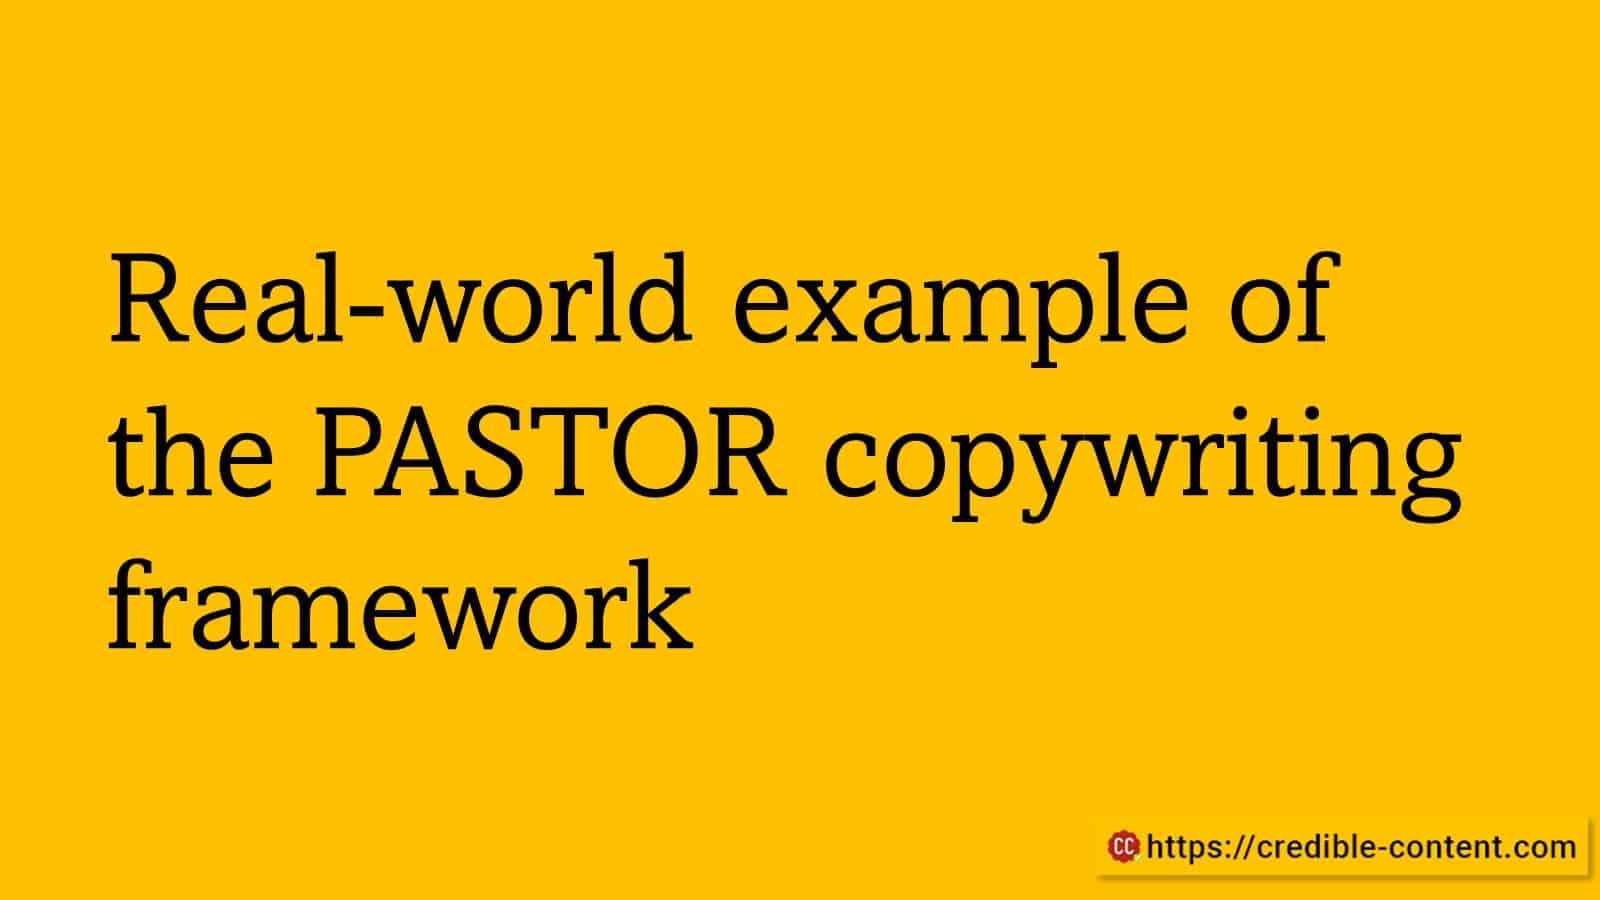 Real-world example of the PASTOR copywriting framework